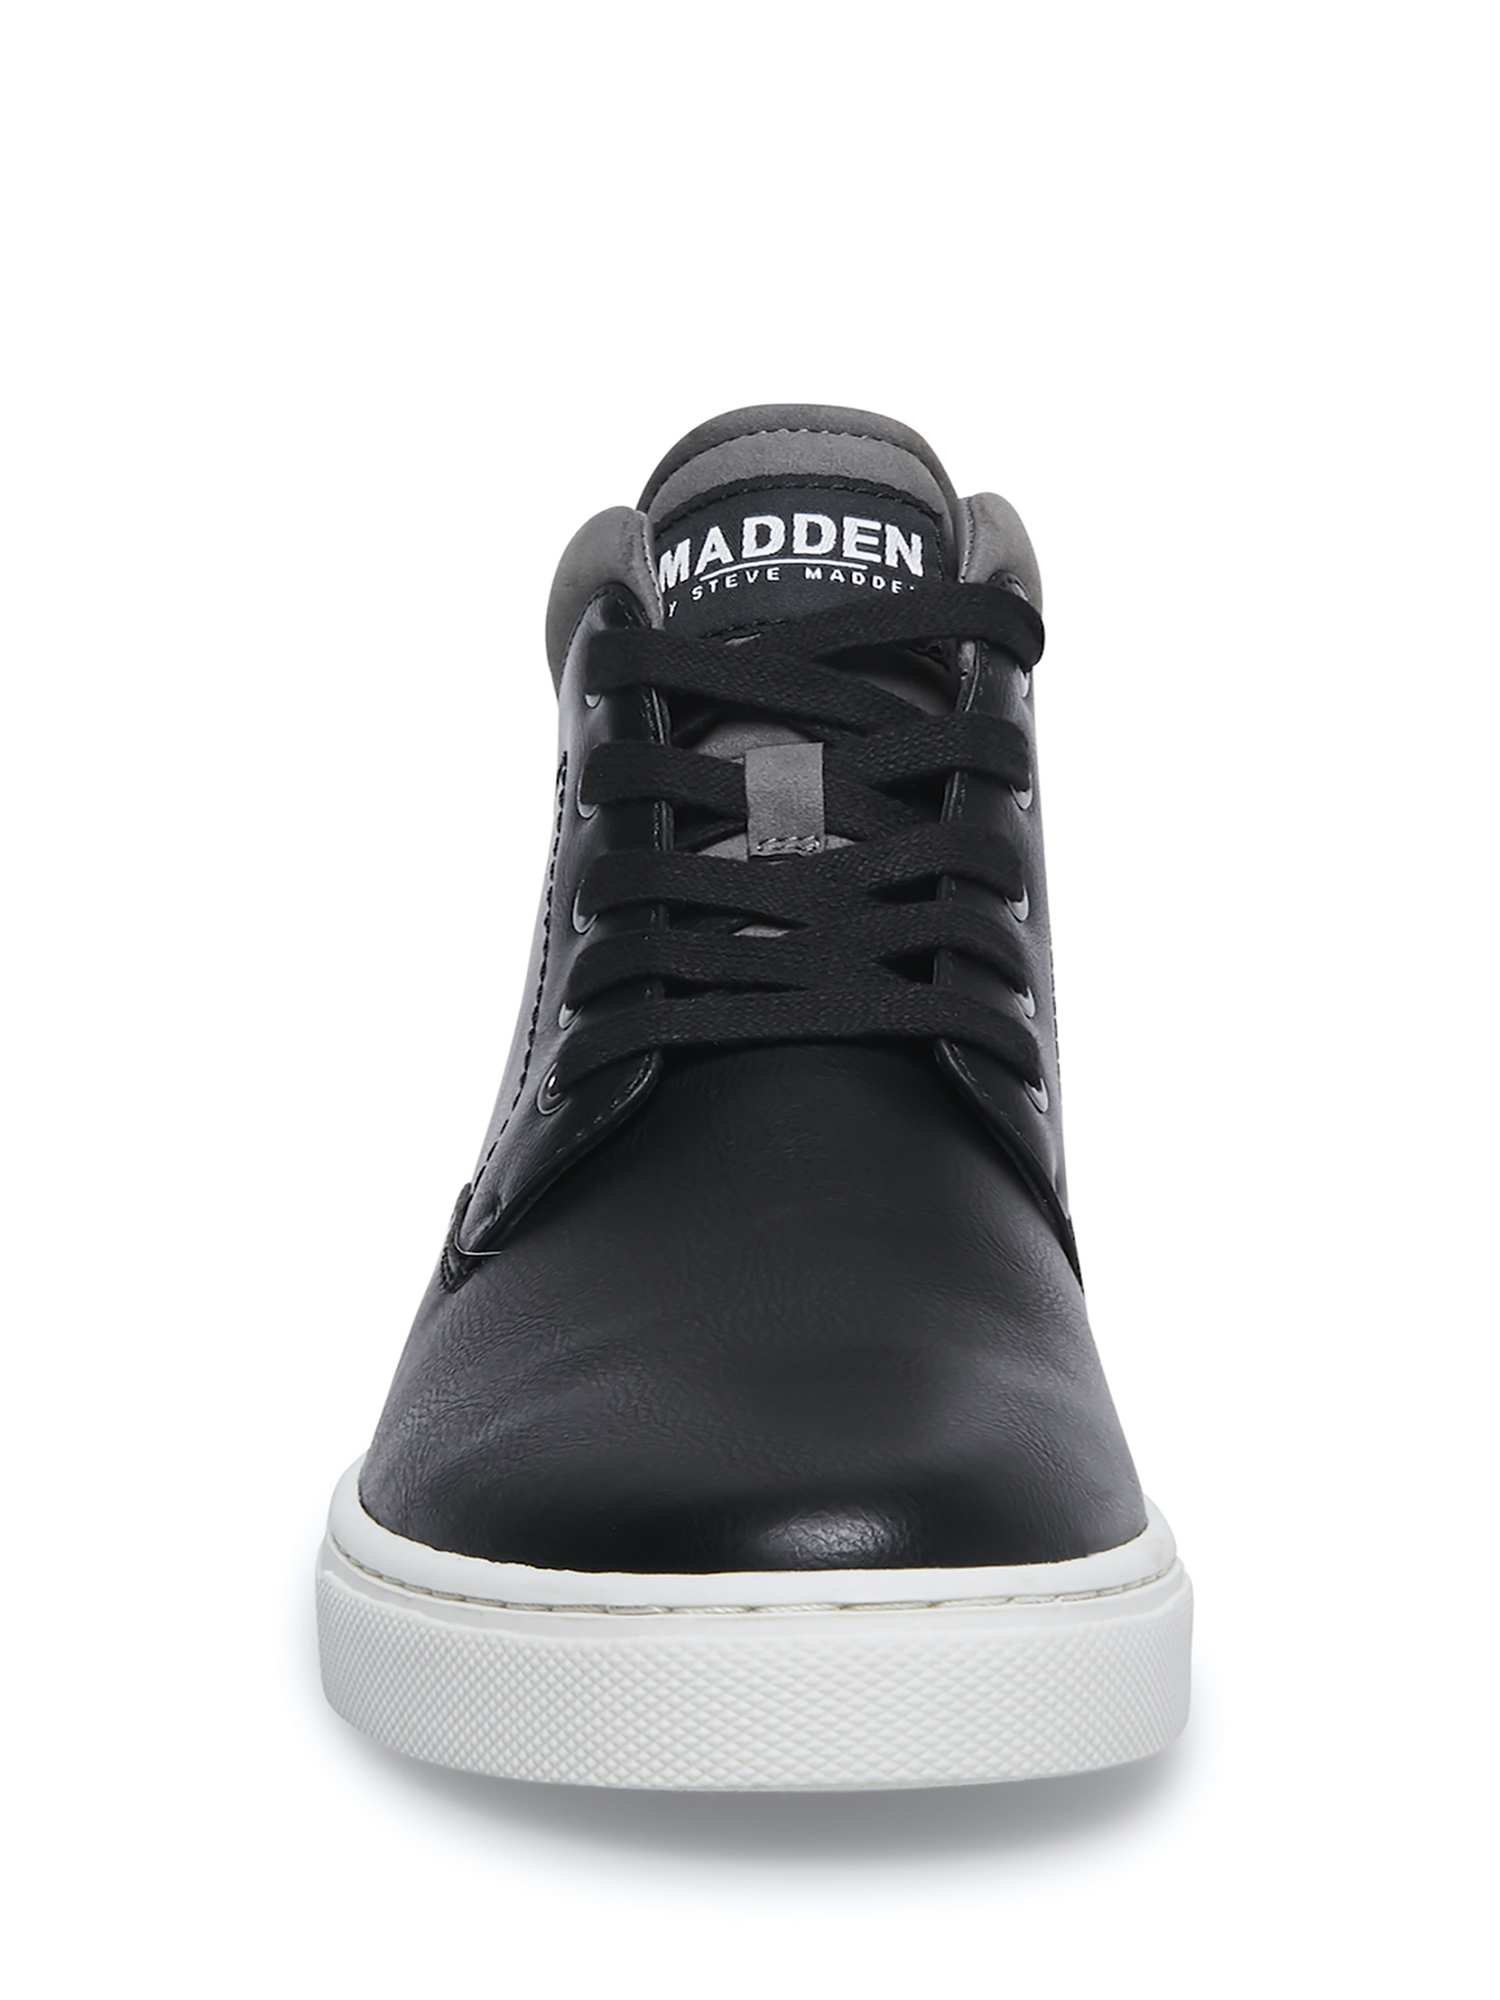 Madden Men's Crooli Sneaker - image 4 of 7